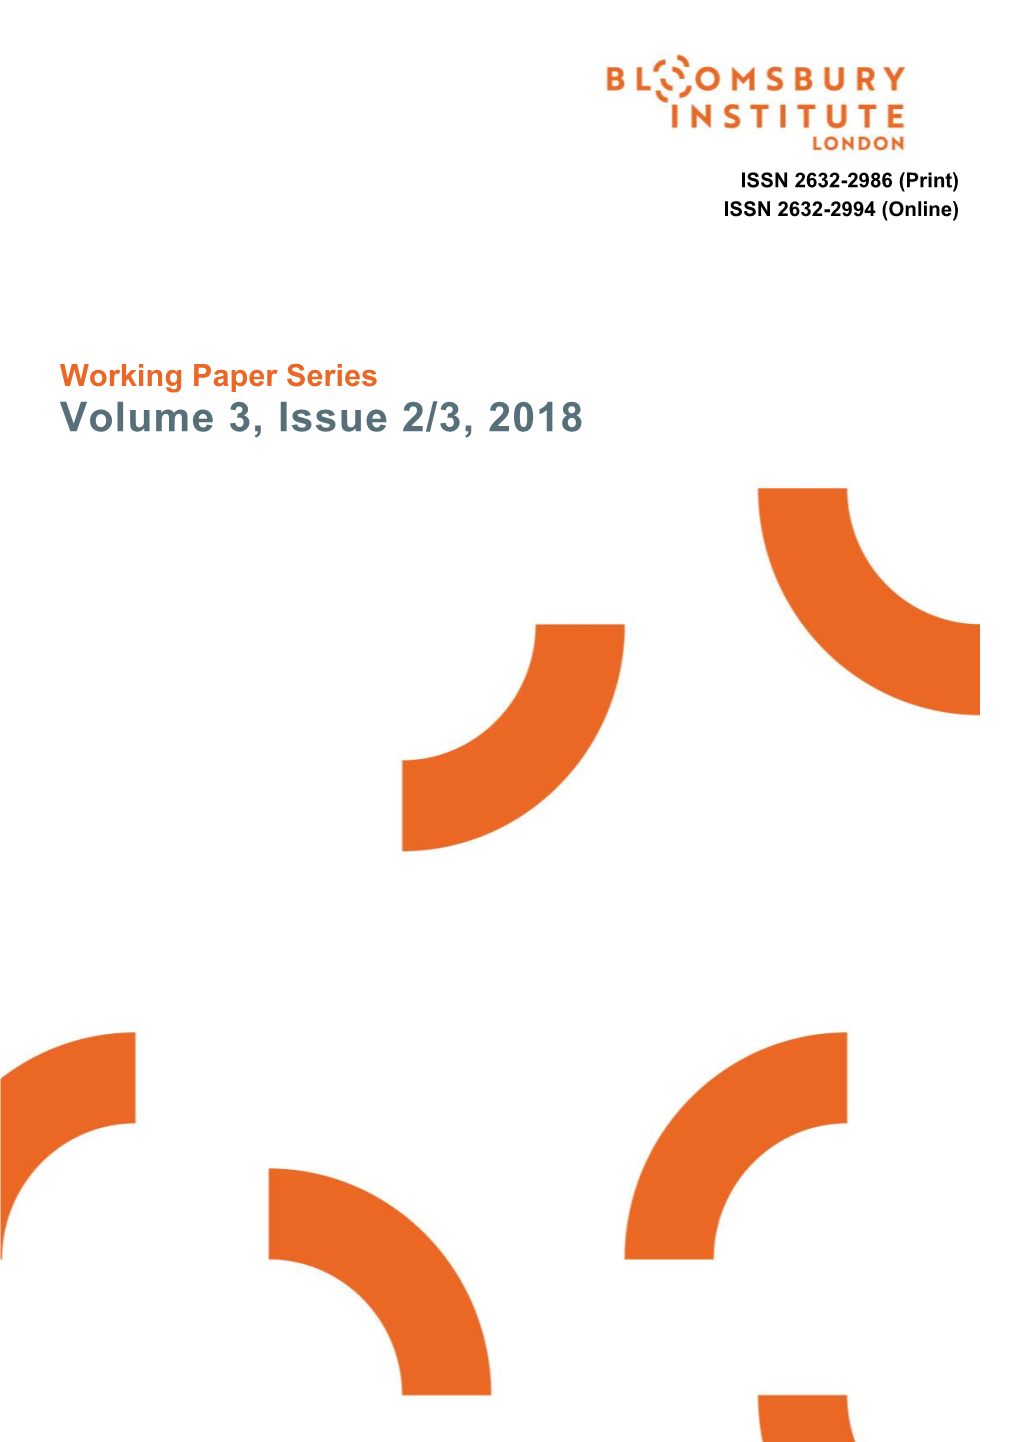 Working Paper Series Volume 3, Issue 2/3, 2018